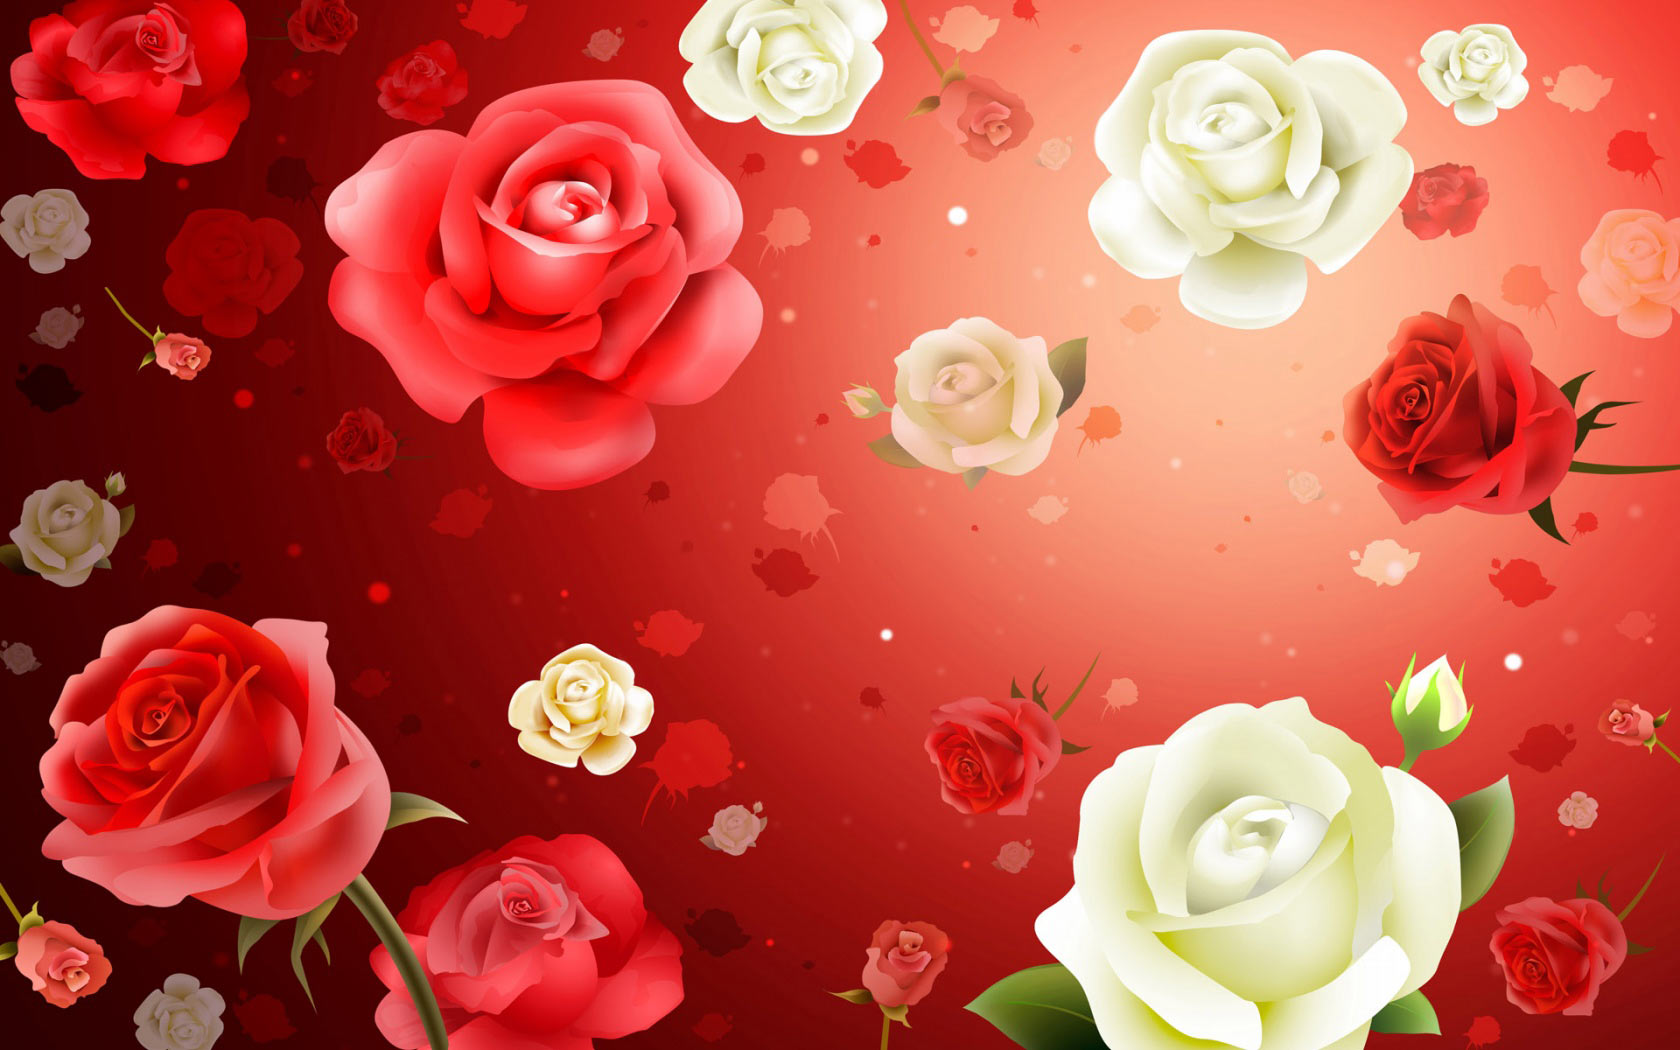 Roses Flowers Background Windows Desktop Wallpaper In High